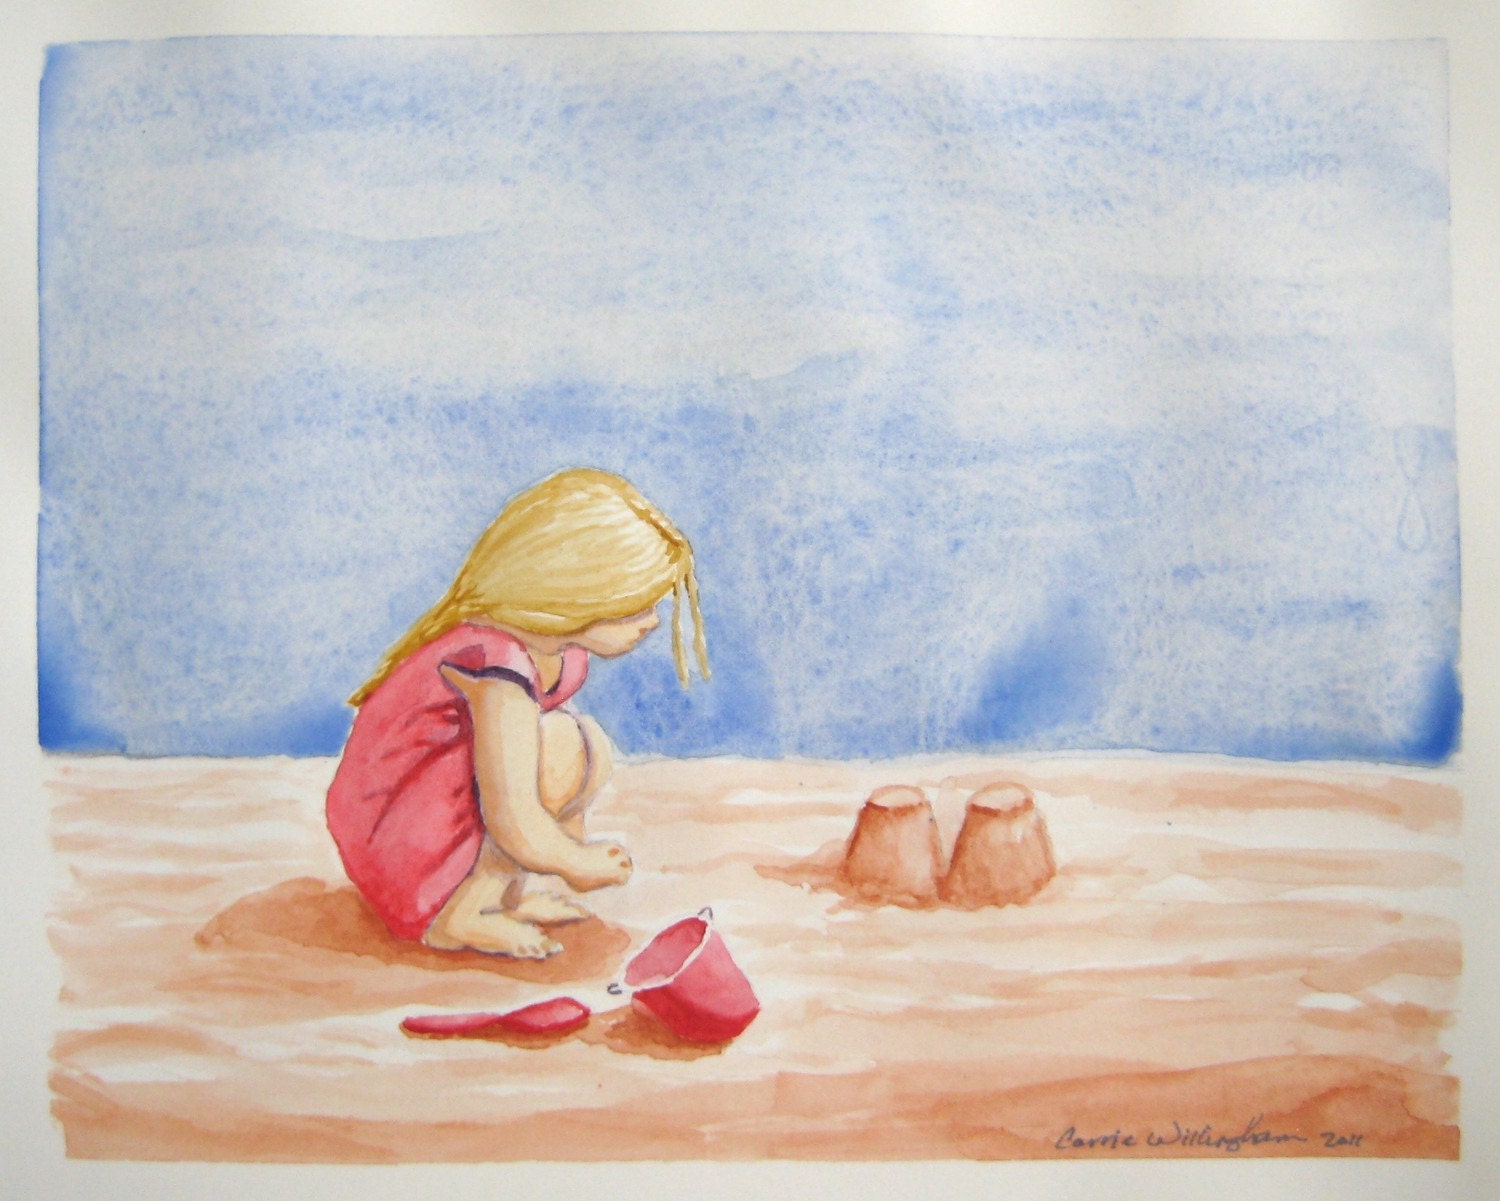 Building Sand Castles - 8x10 inch Origingal Watercolor Painting